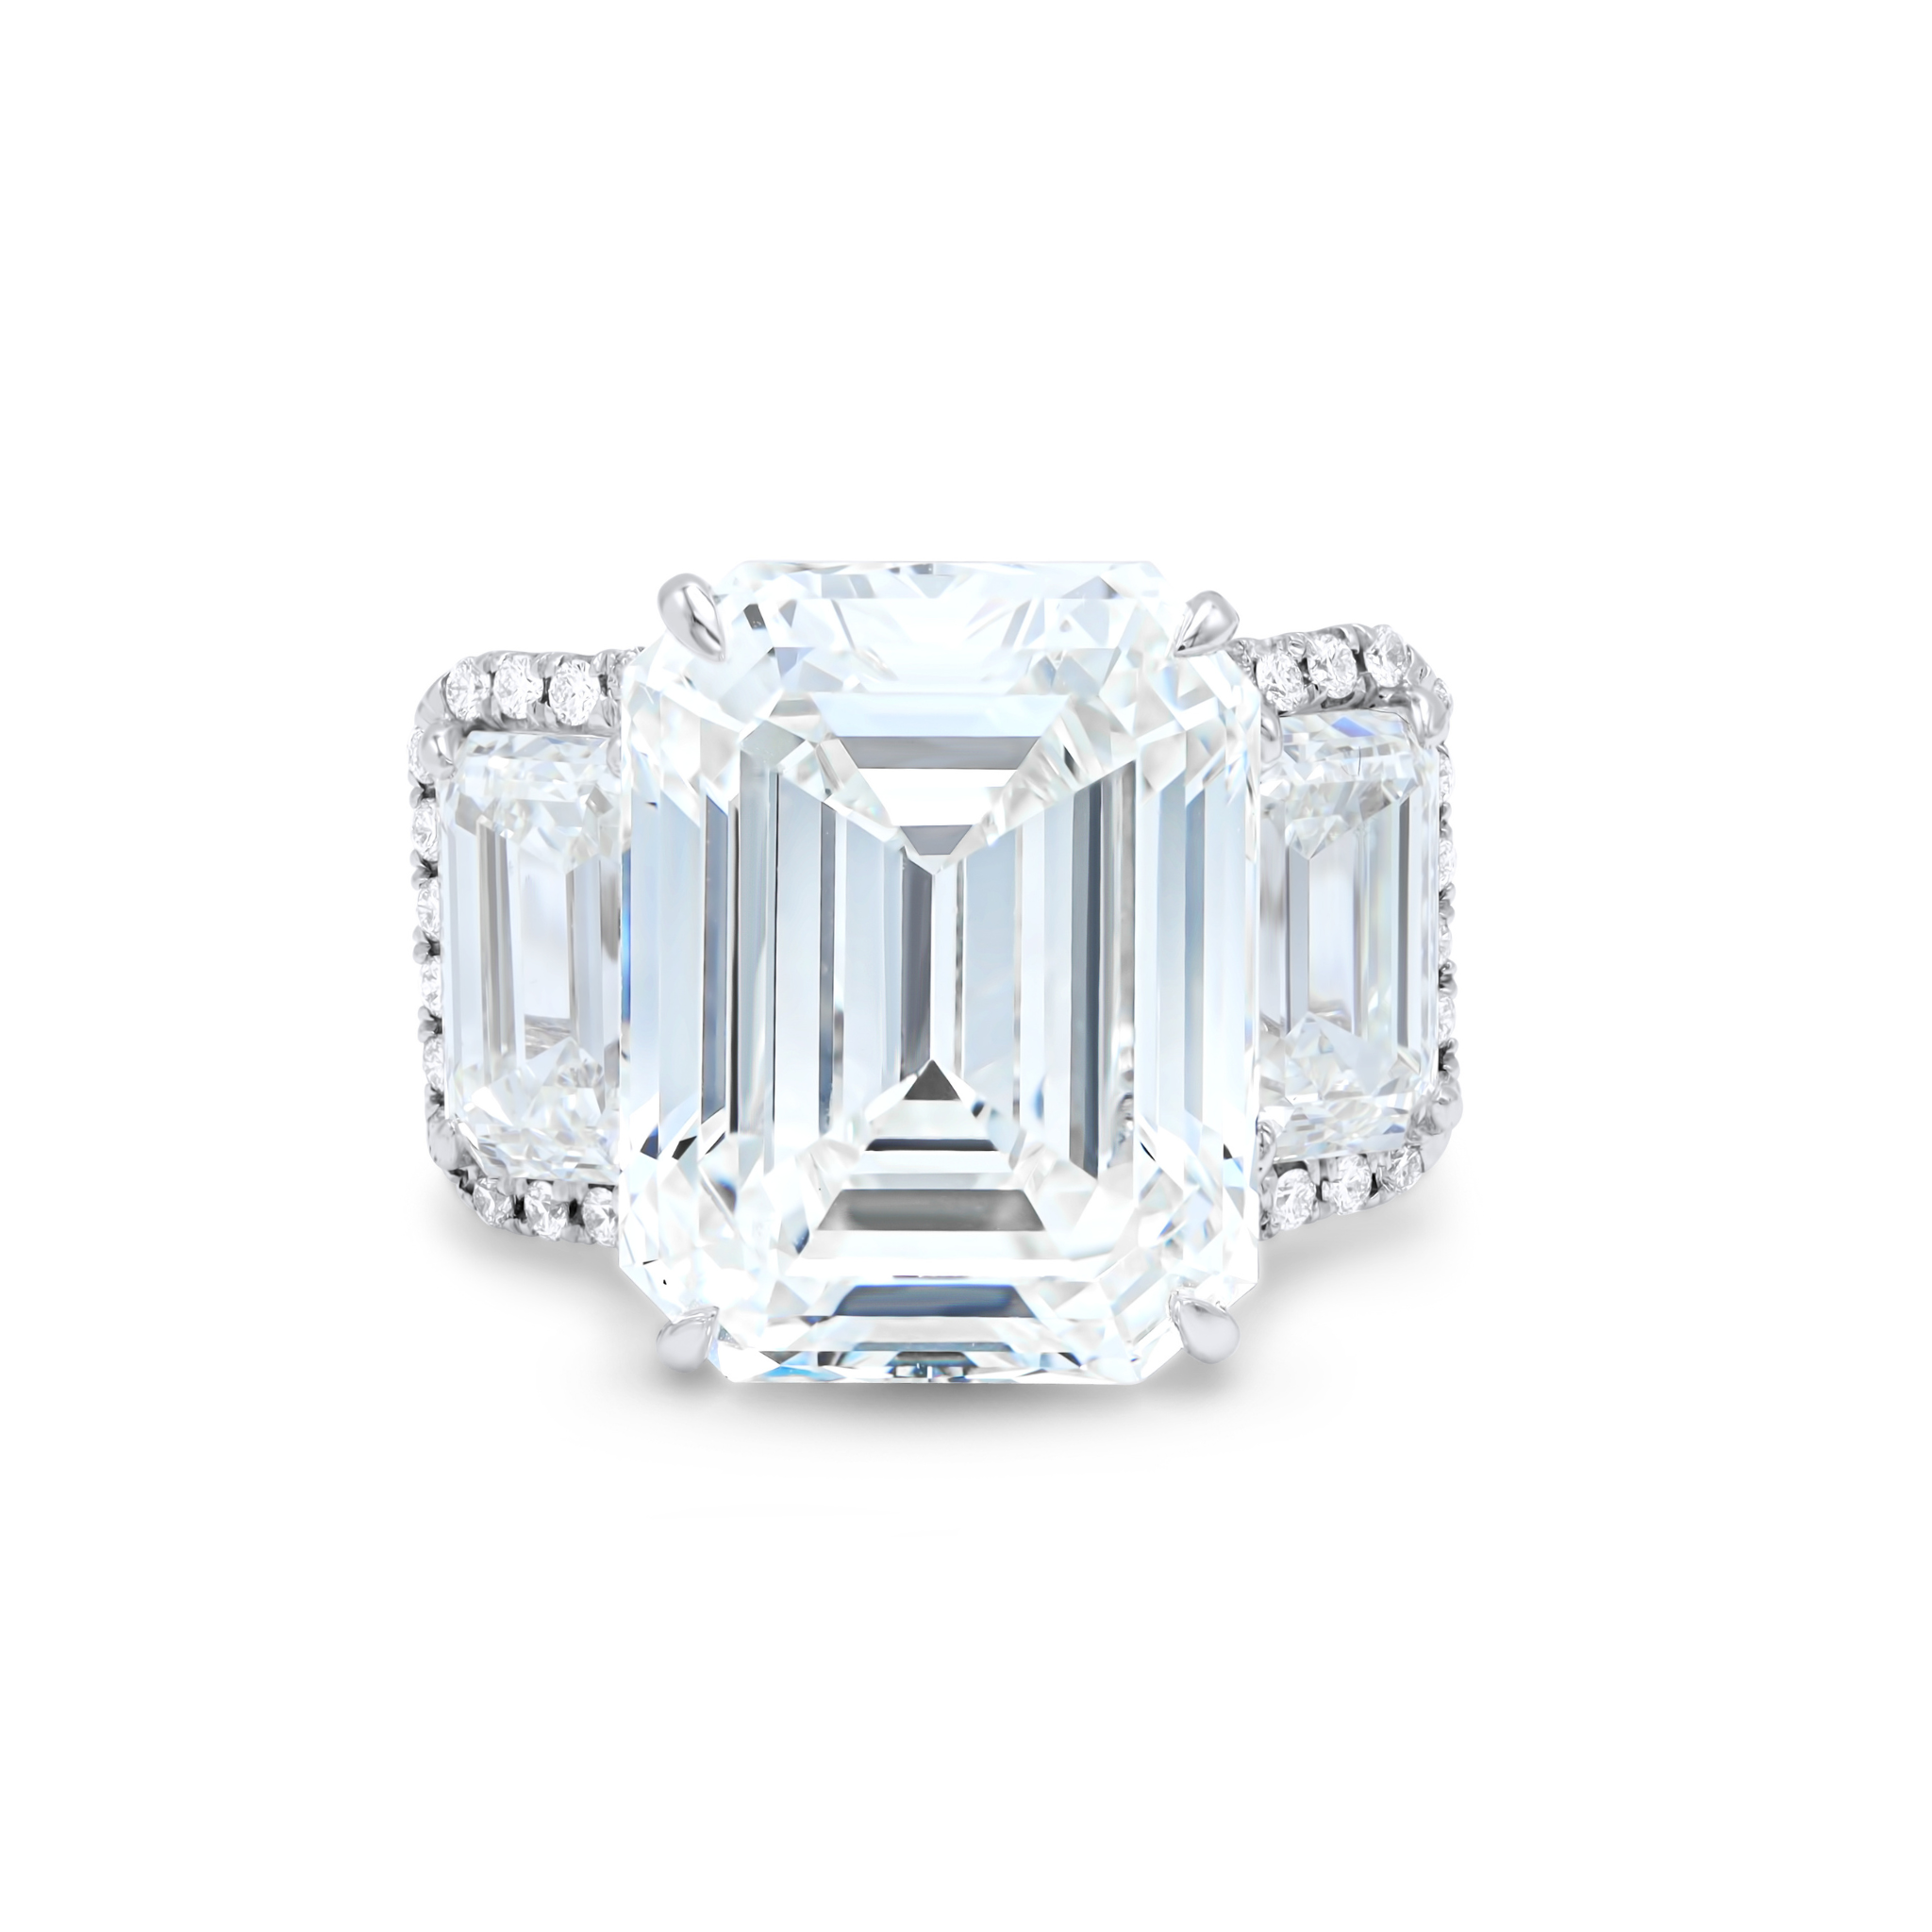 2.44ct Three-Stone Emerald Cut Diamond Ring.jpg